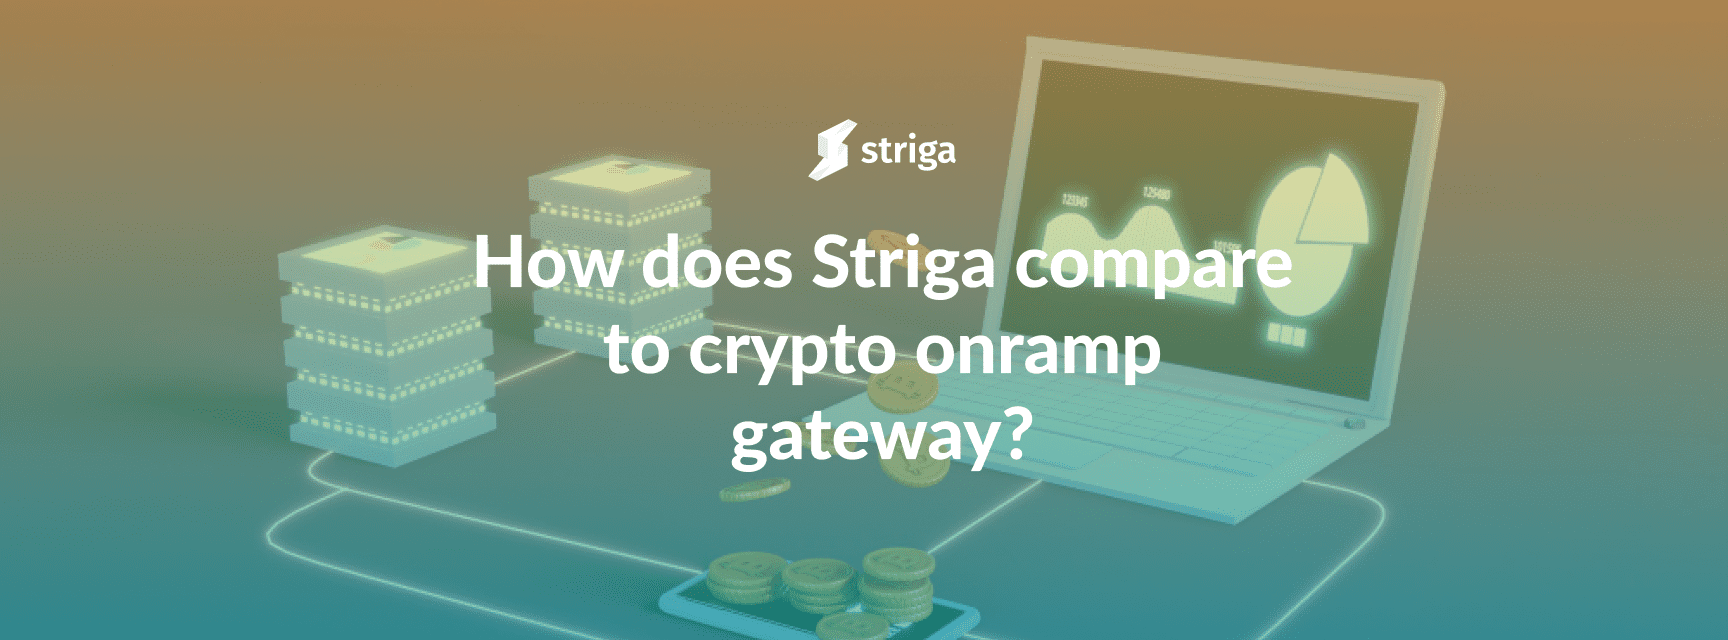 striga-vs-fiat-to-crypto-payment-gateway